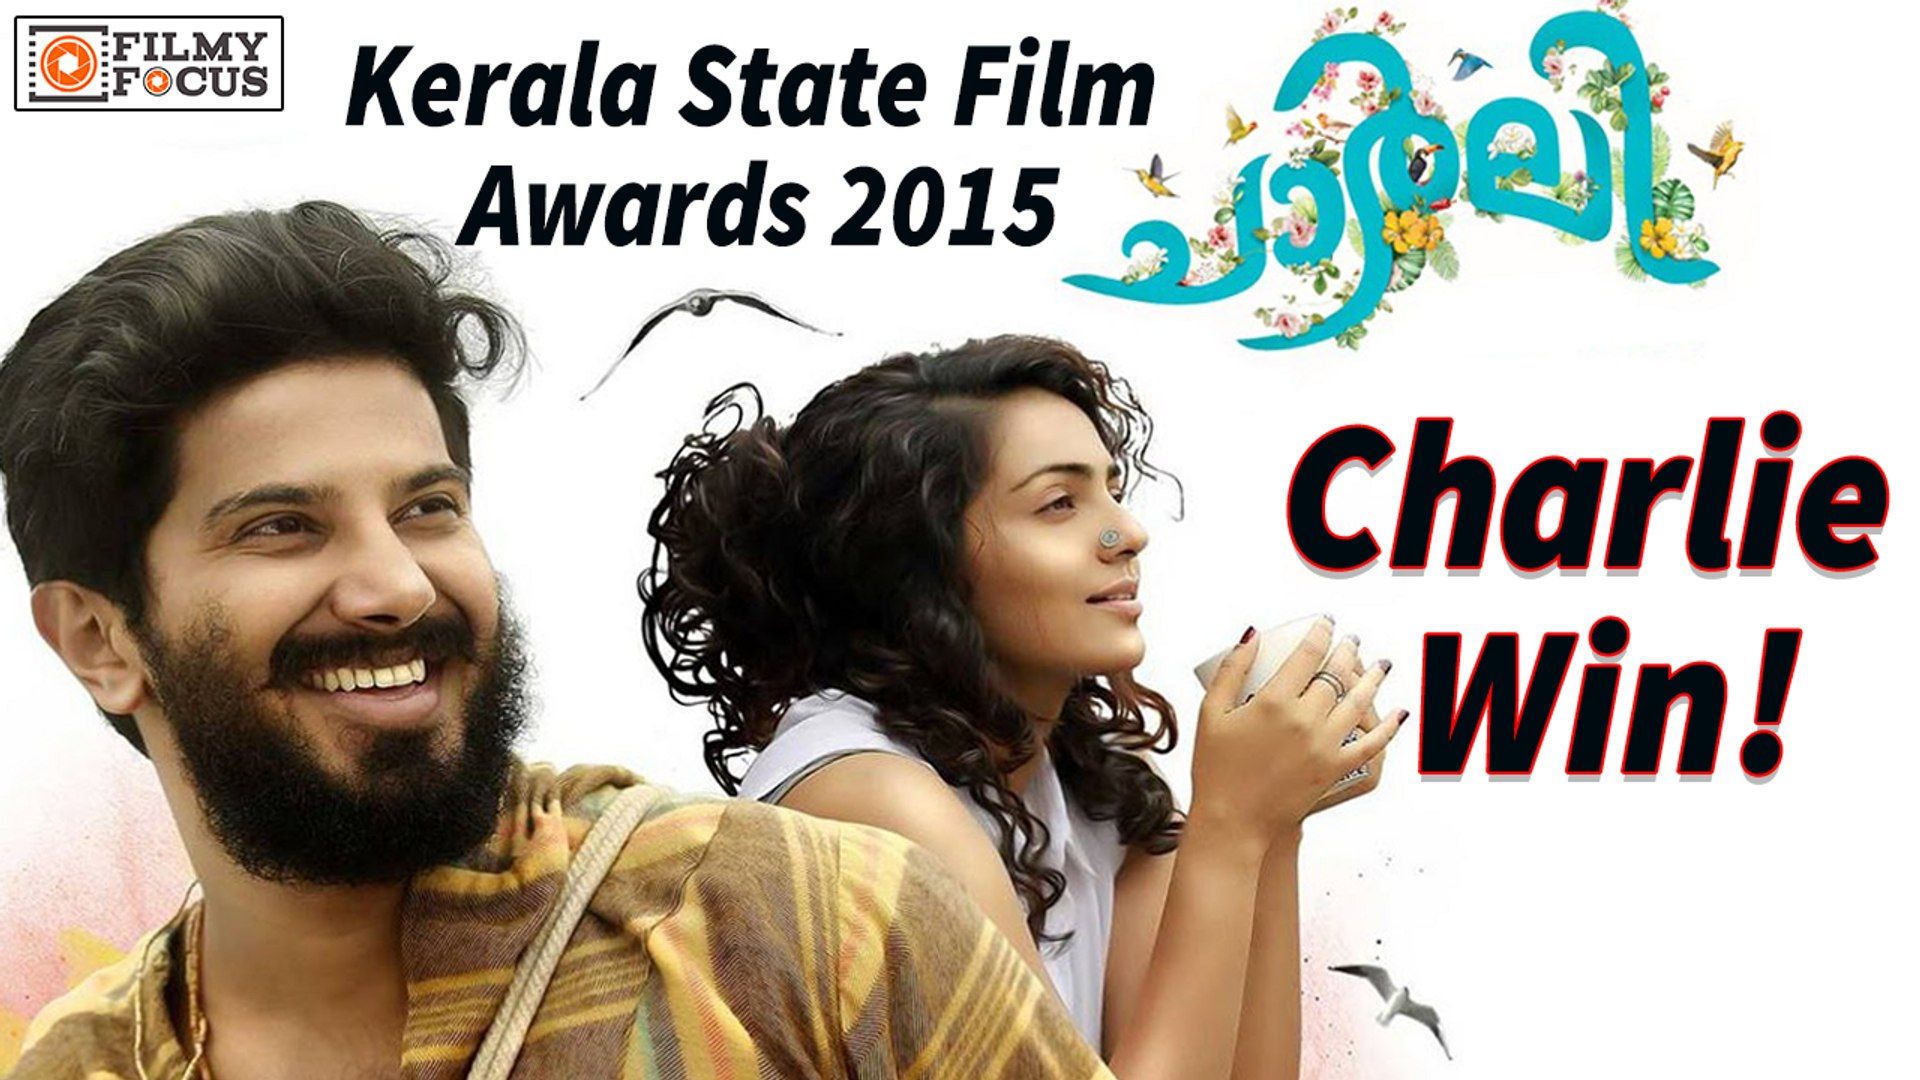 Kerala State Film Awards Dulquer Salmaan, Parvathy, Charlie